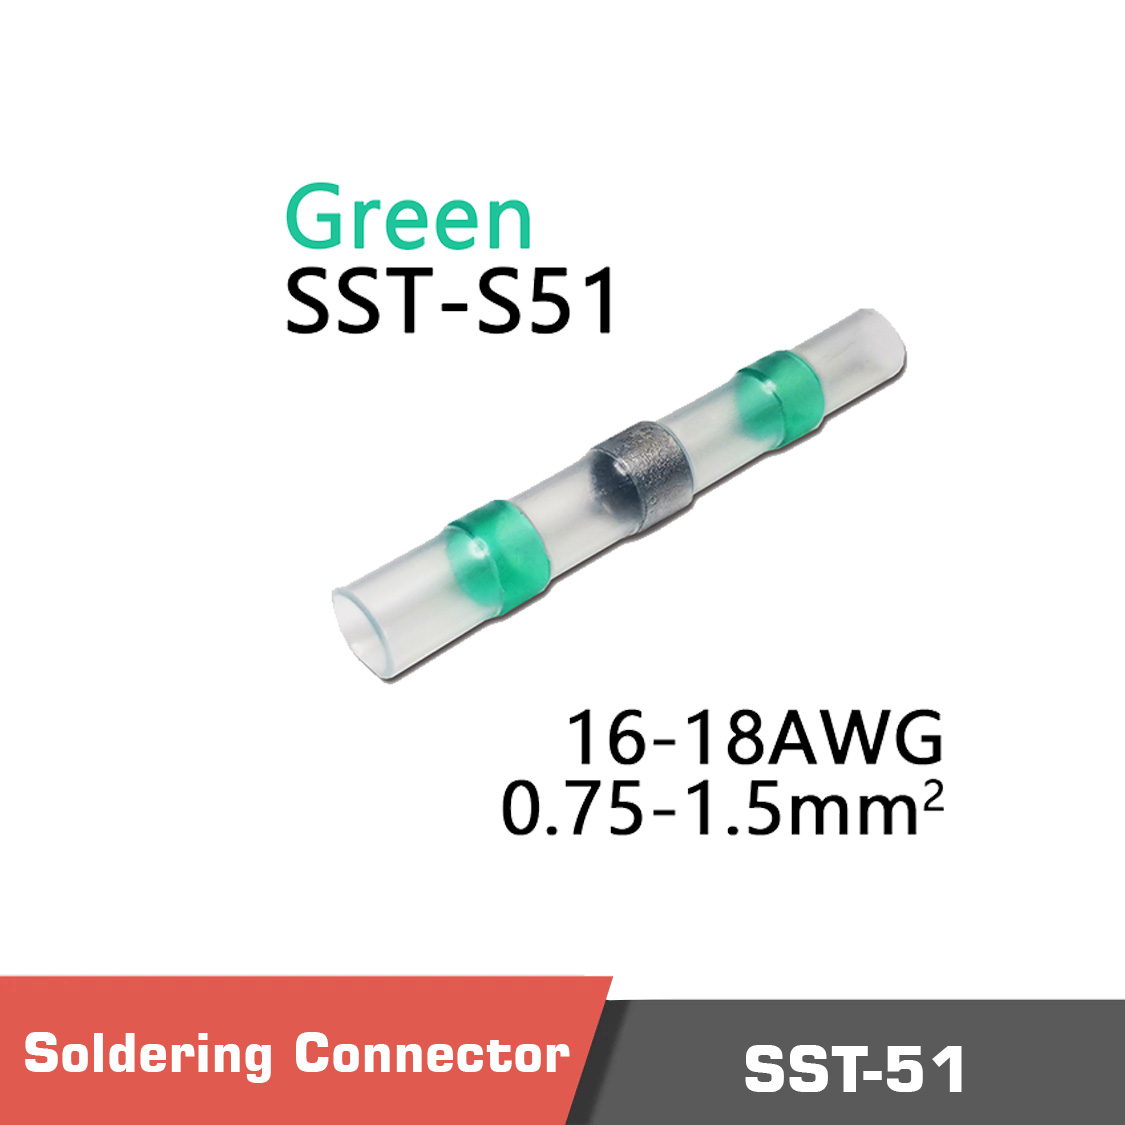 Sst 51 - sst-61,sst-61 soldering connector,soldering connector - motionew - 13